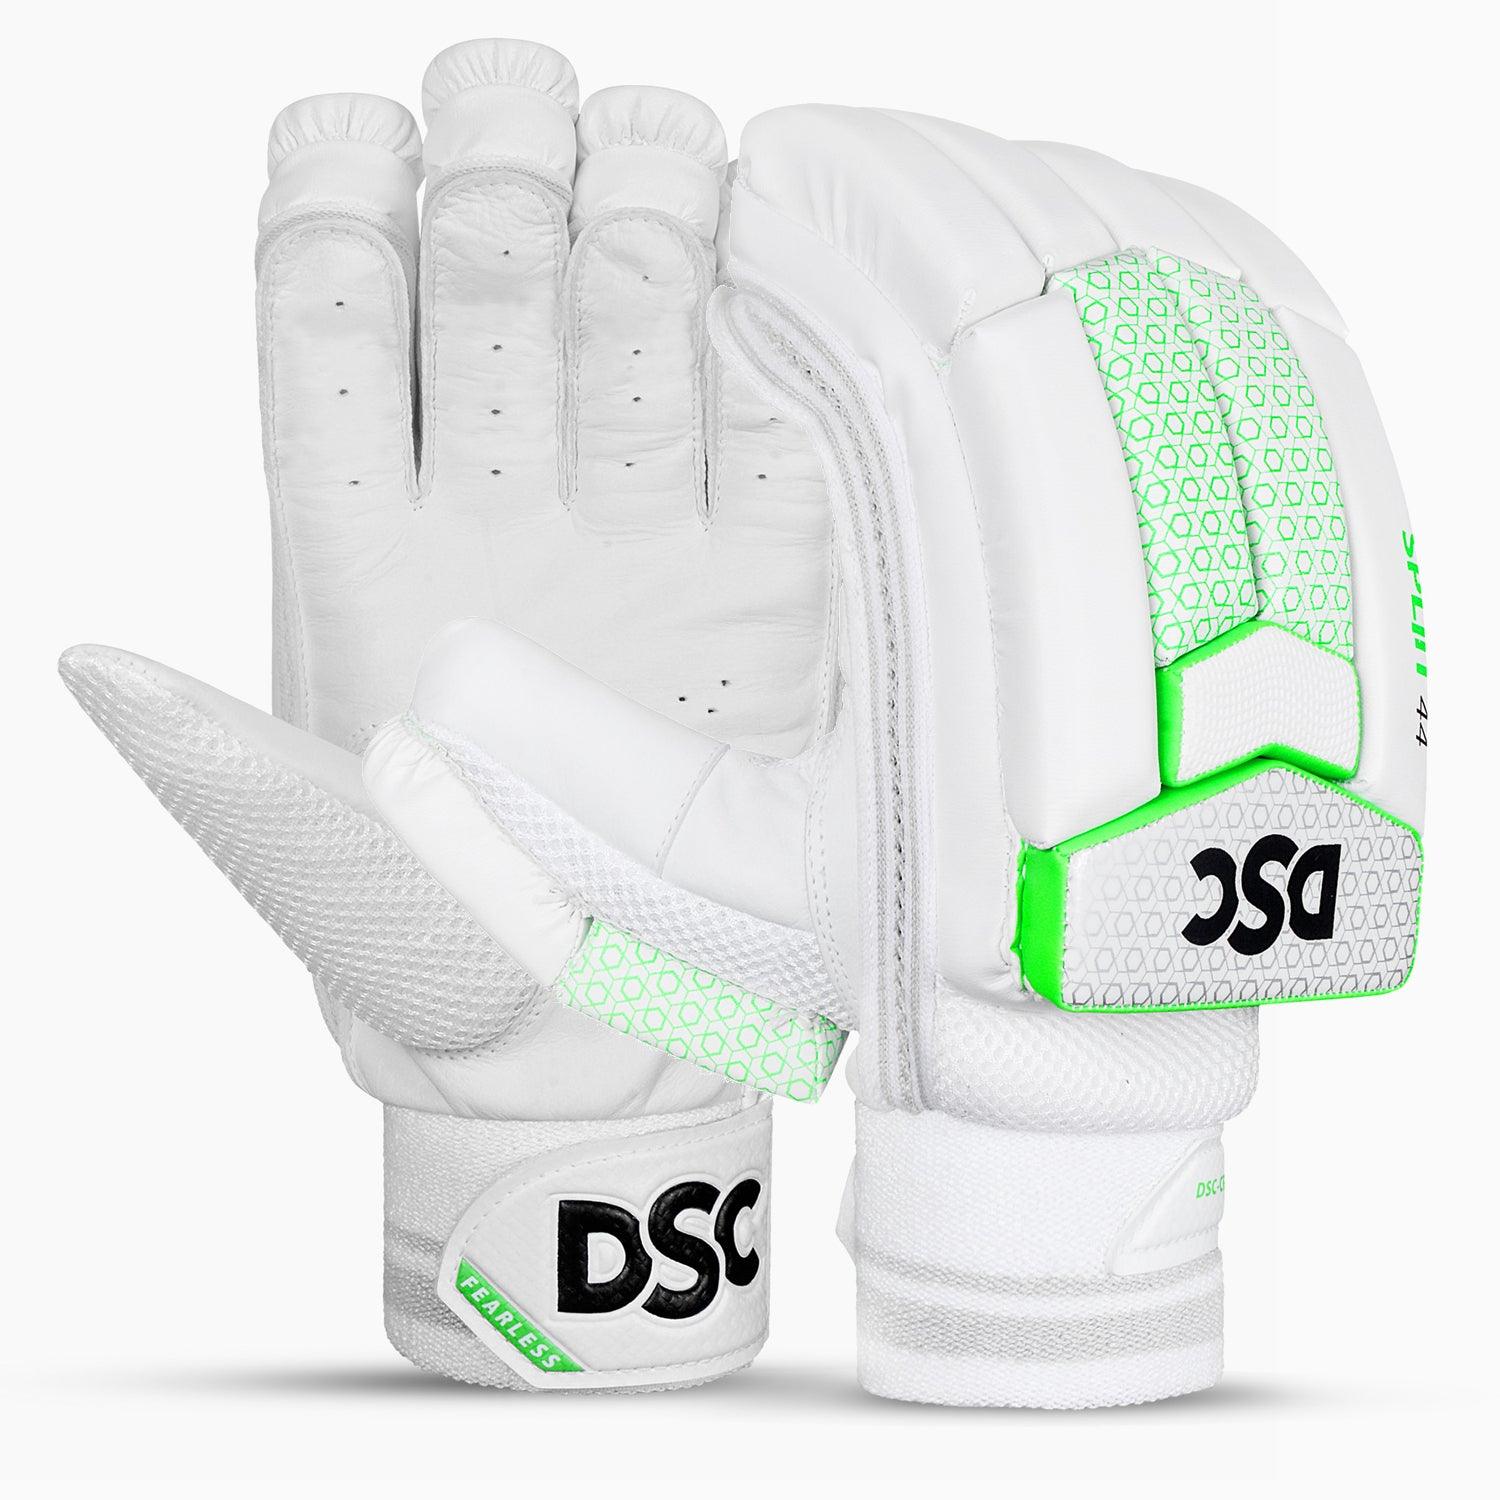 DSC Spliit 44 Cricket Batting Gloves - JUNIOR - AT Sports